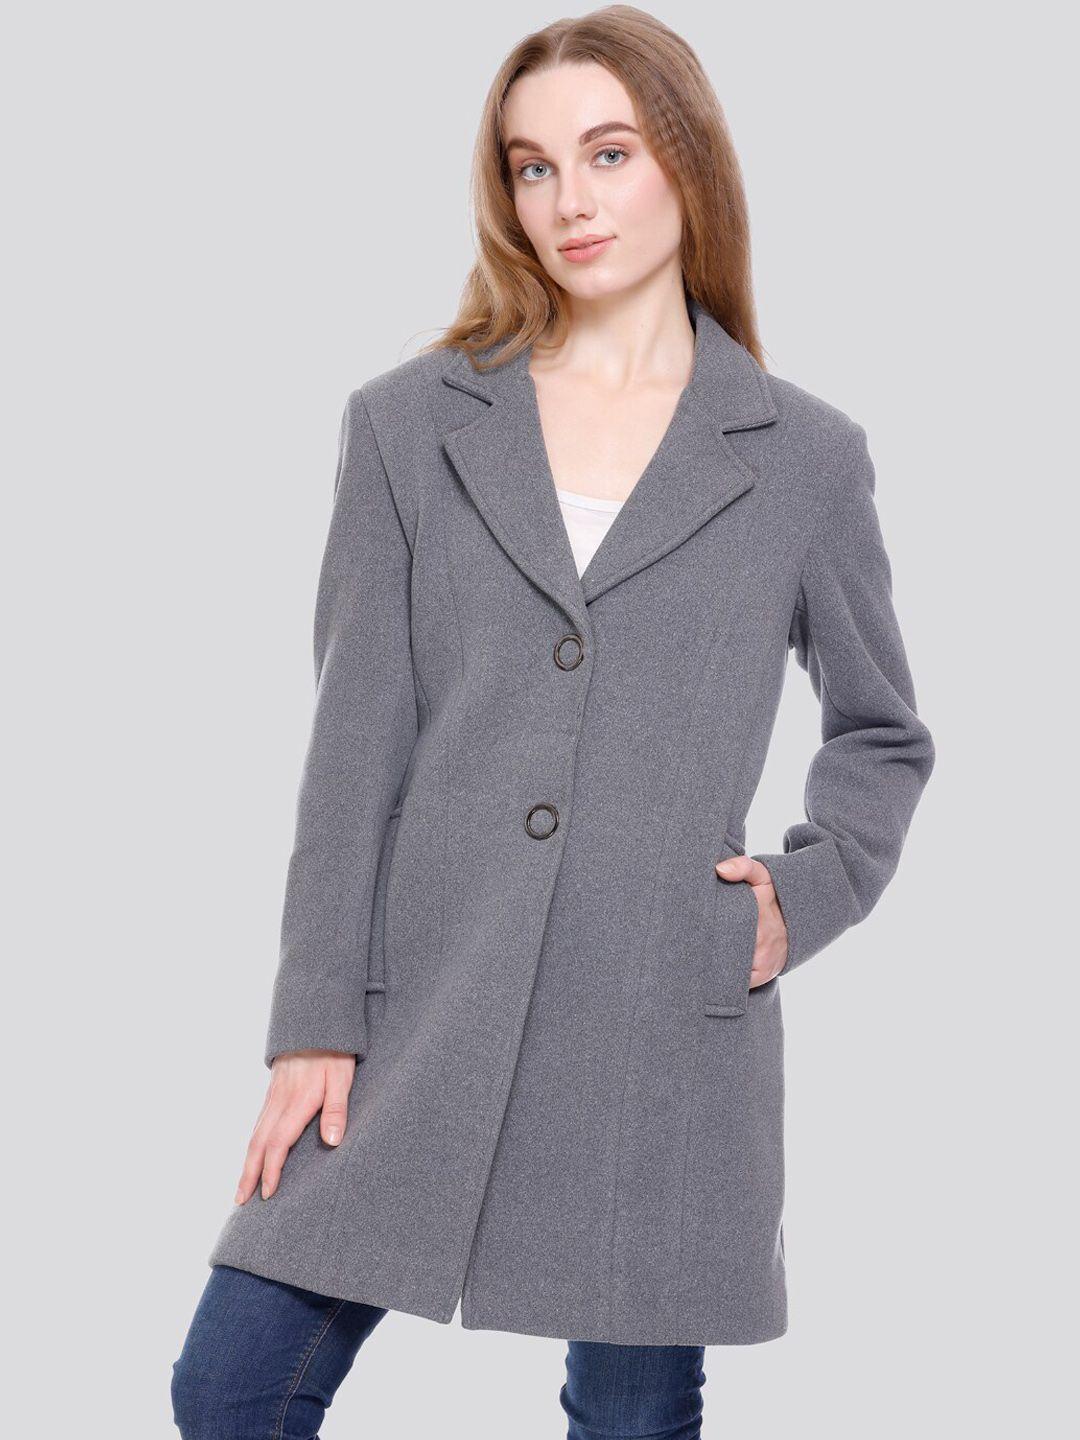 c-aerin self design single breasted winter wear overcoat